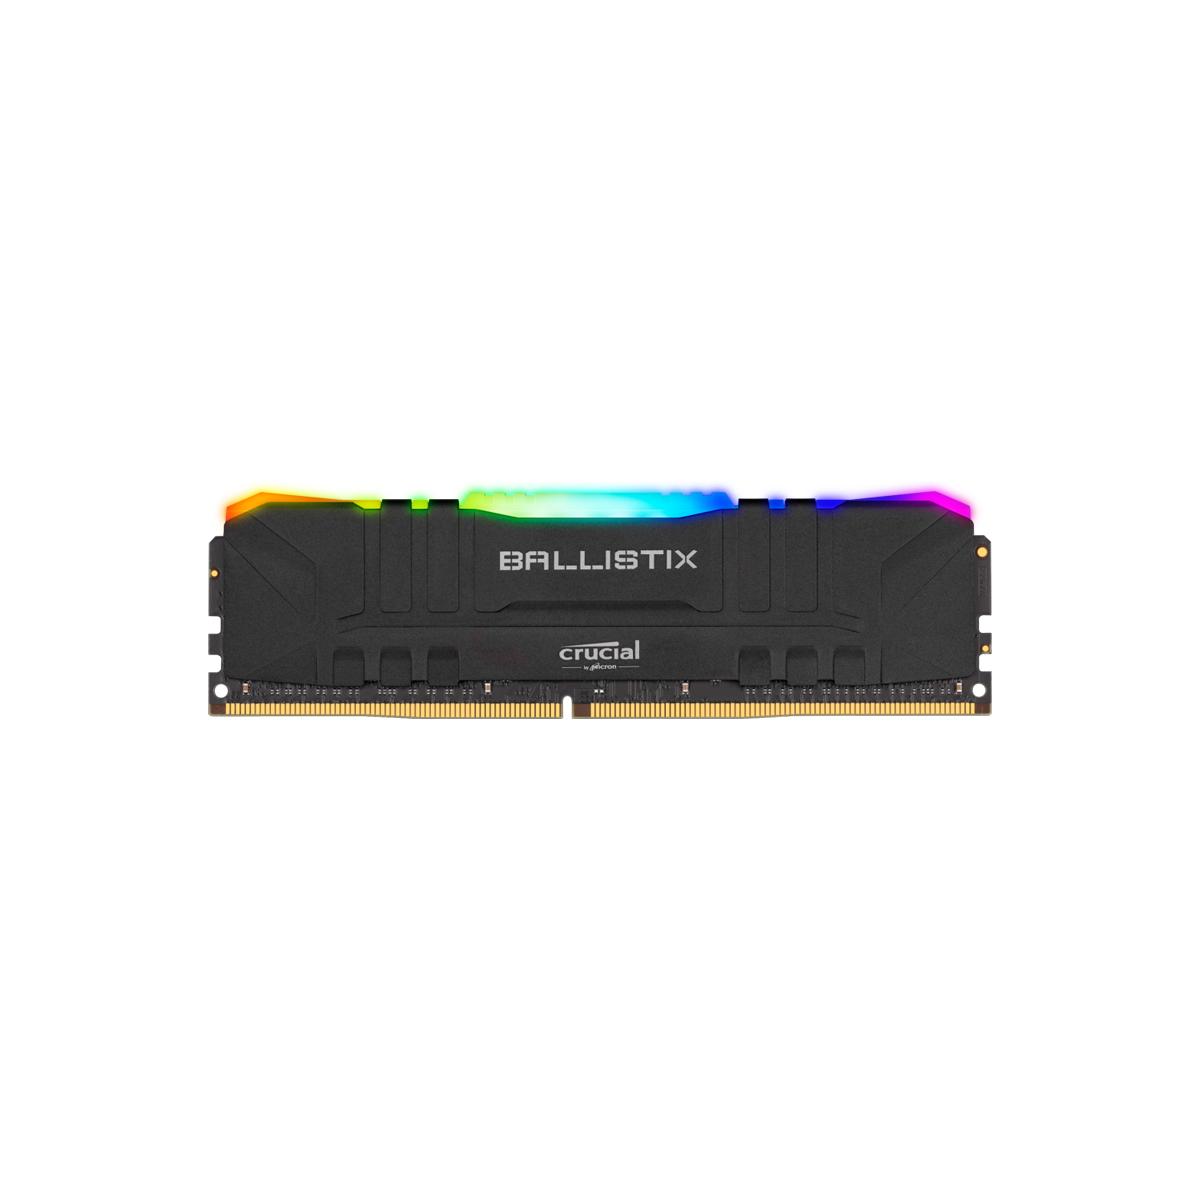 MEMORIA DIMM DDR4 CRUCIAL BALLISTIX (BL8G32C16U4BL) RGB 8GB 3200MHZ, BLACK HS, CL16 - CRUCIAL